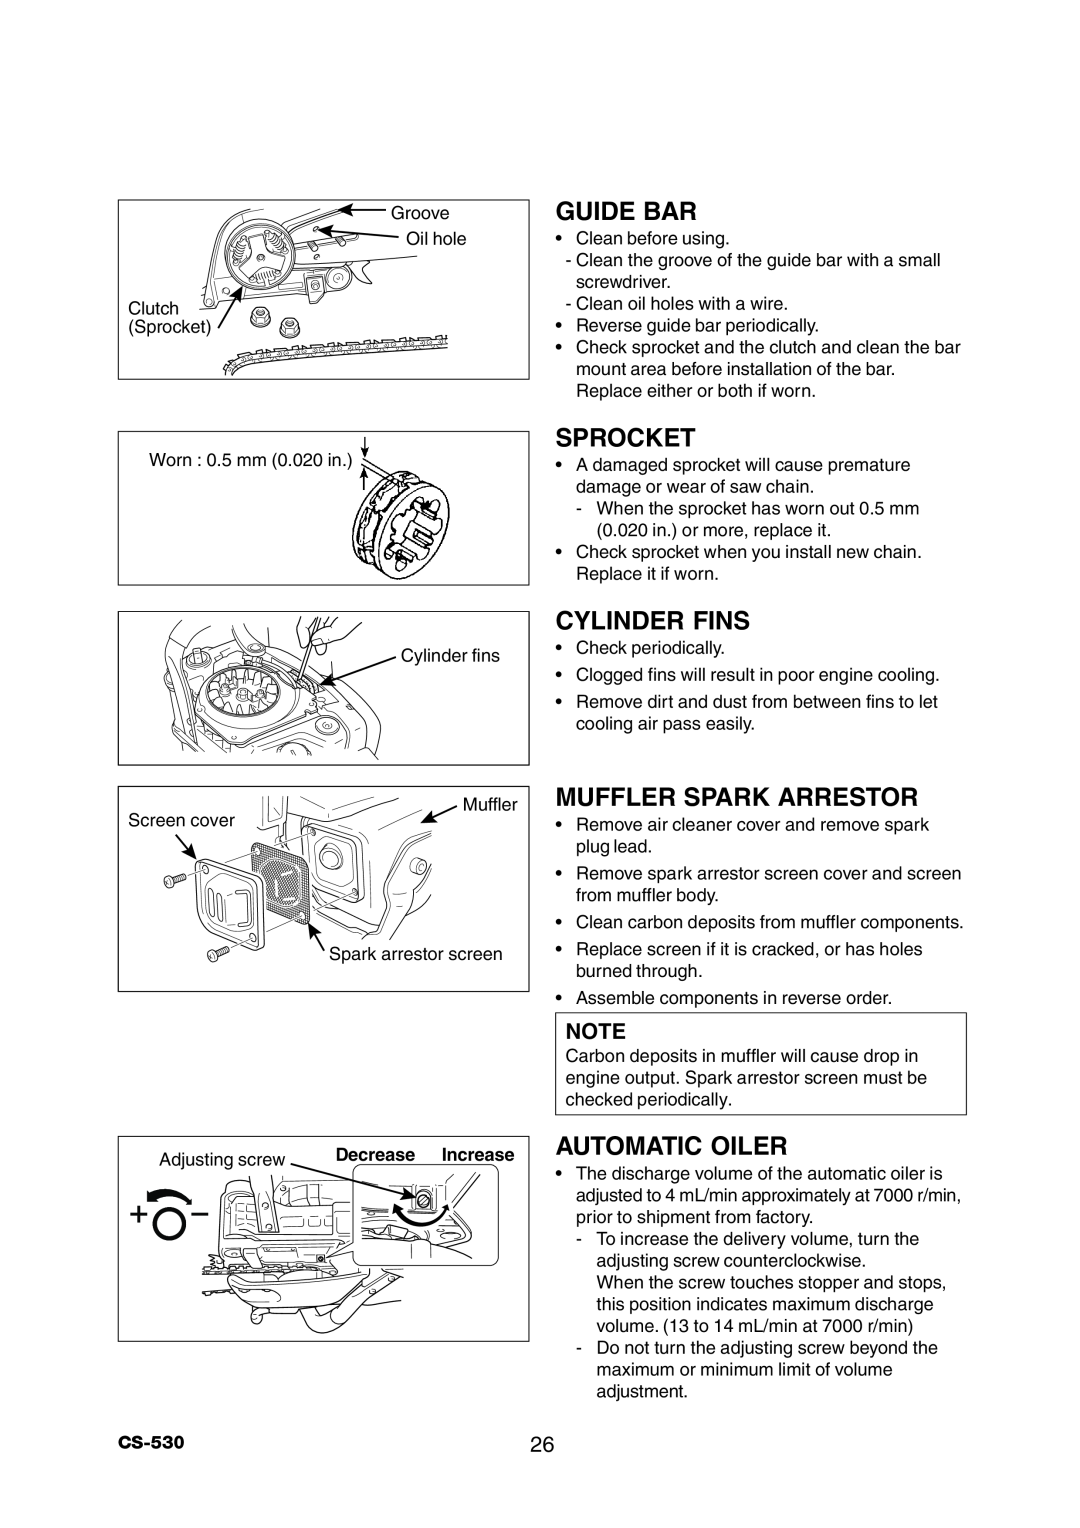 Echo CS-530 instruction manual Sprocket, Cylinder Fins, Muffler Spark Arrestor, Automatic Oiler, Guide Bar 